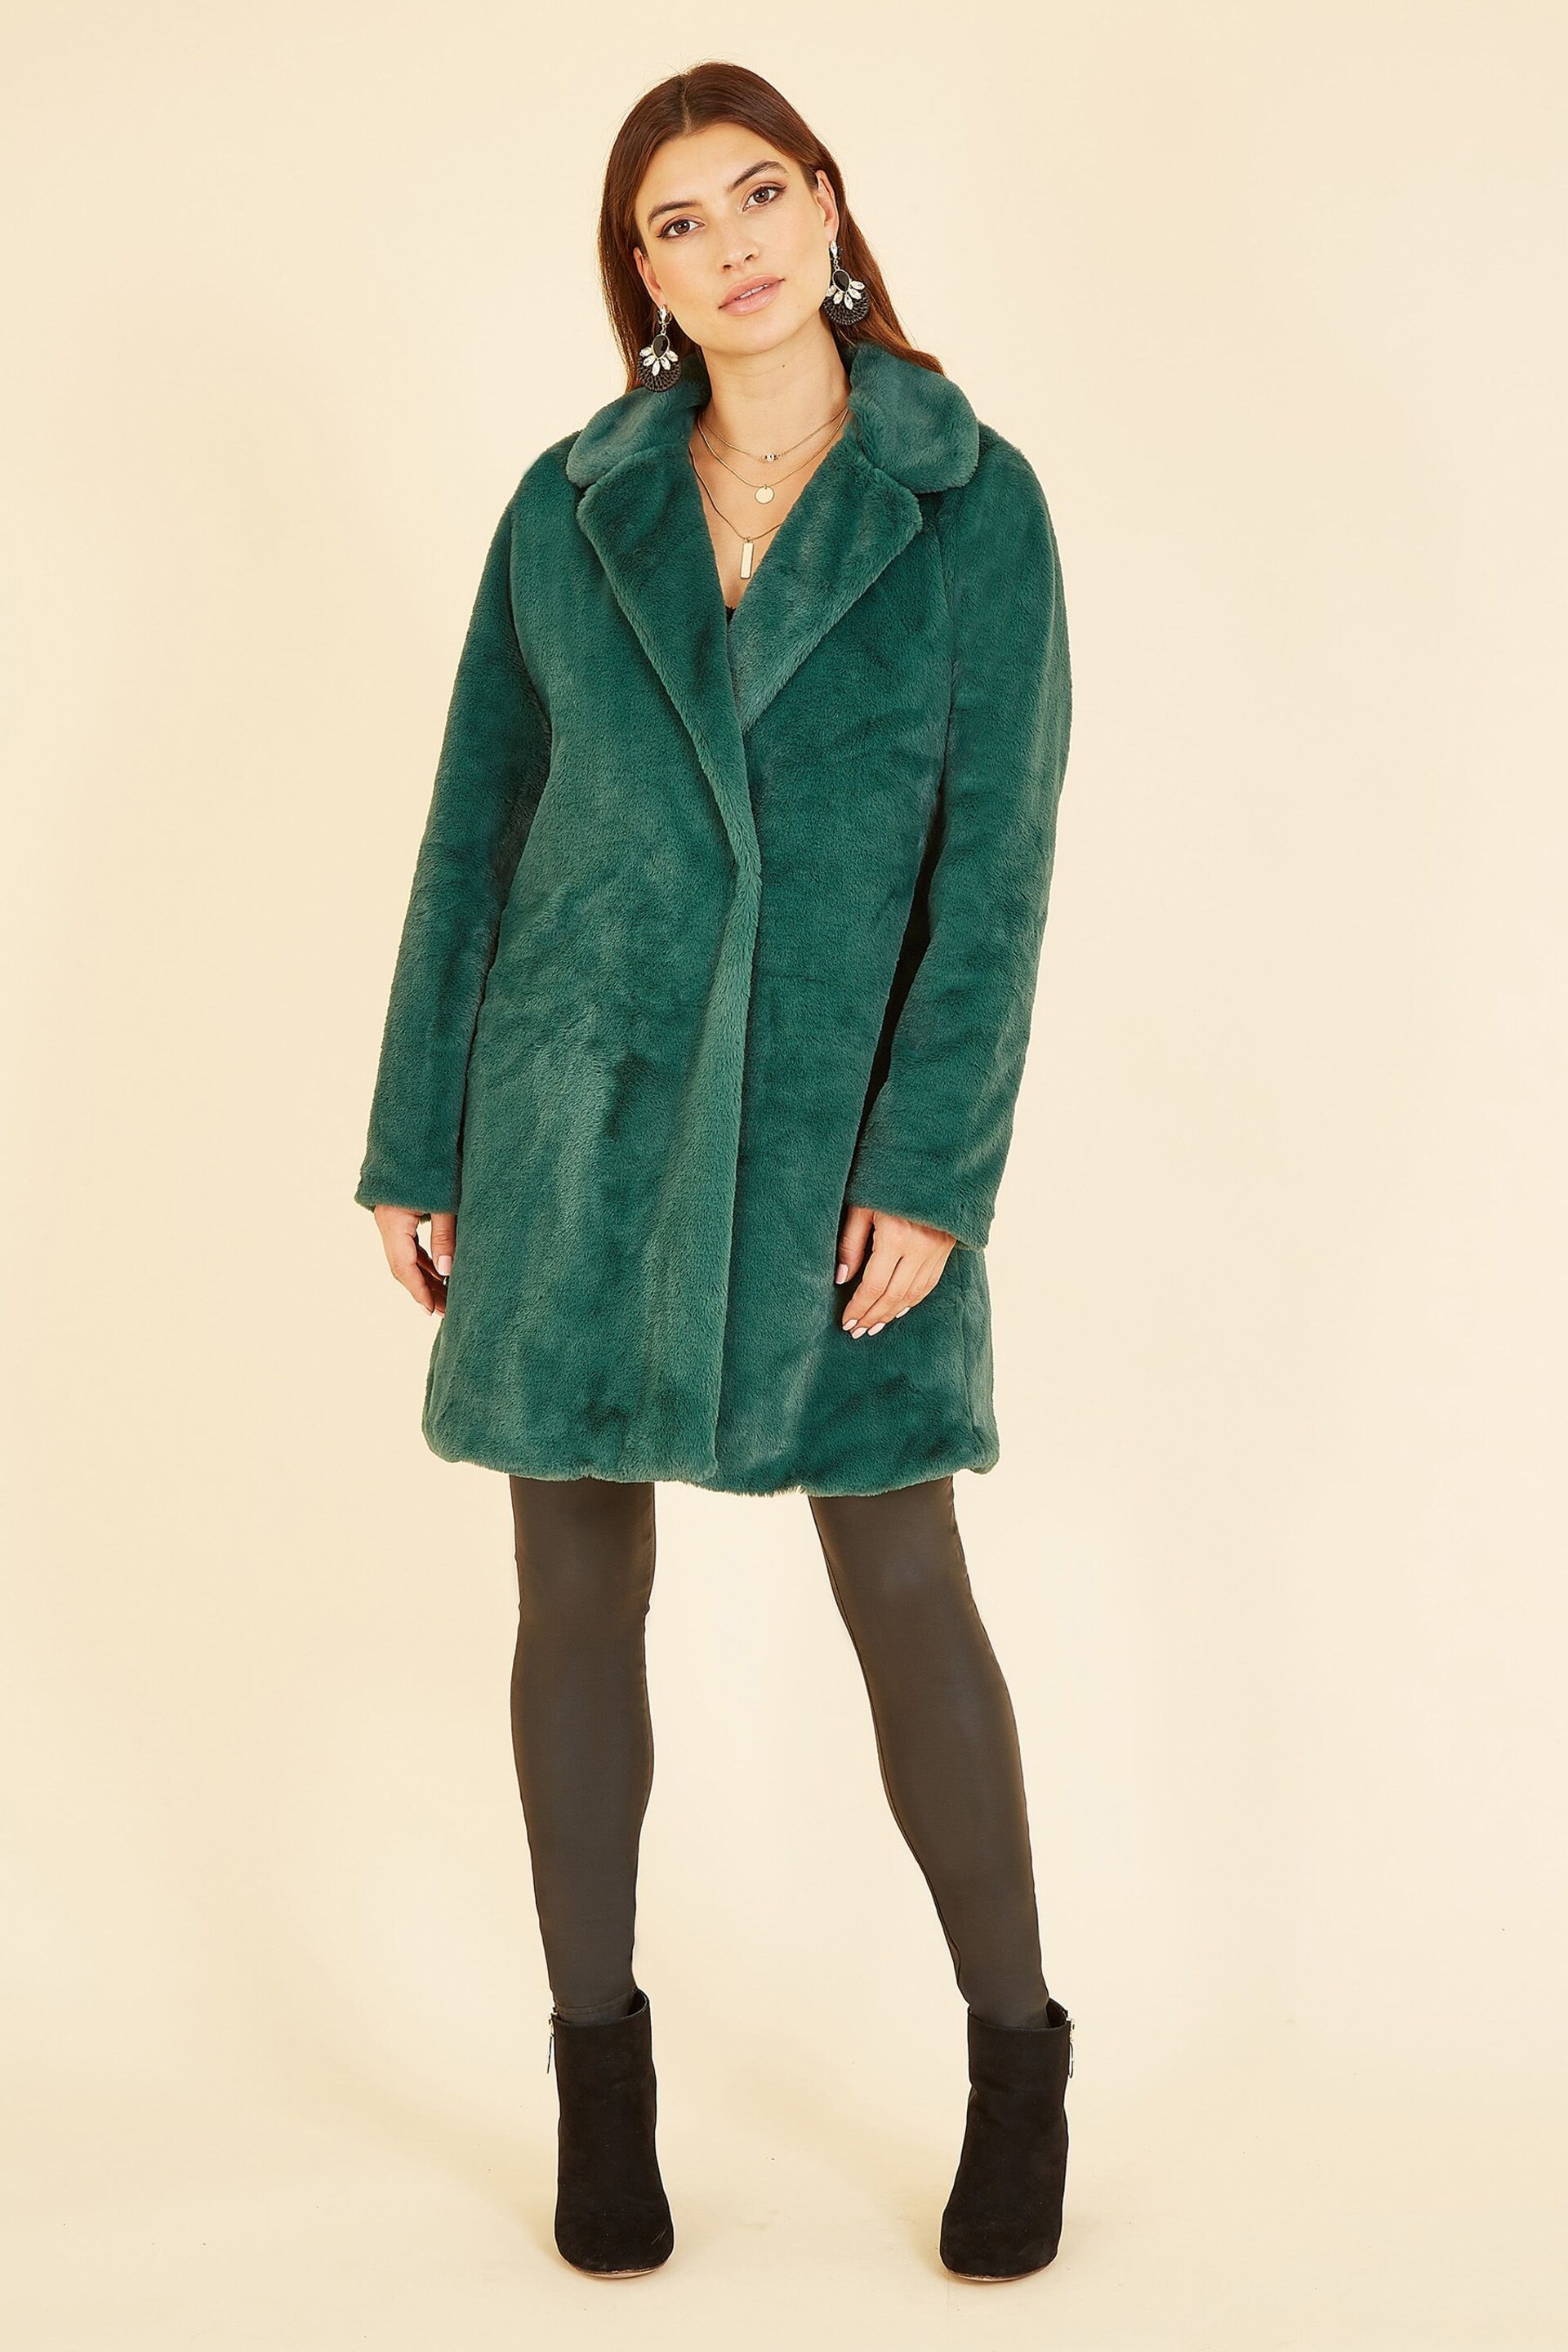 Yumi Green Velvet Faux Fur Coat - Image 2 of 5